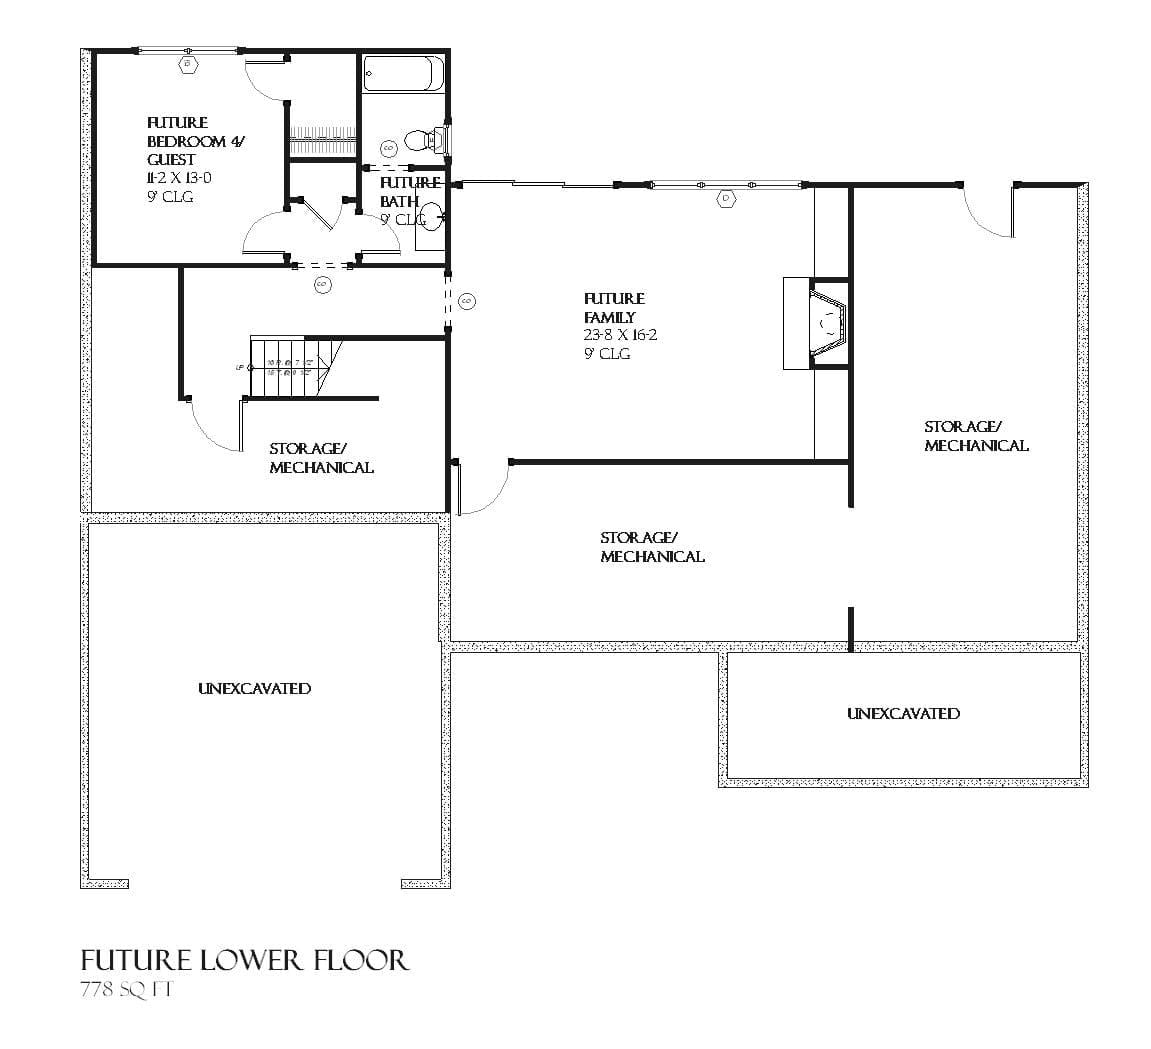 Killington - Home Design and Floor Plan - SketchPad House Plans